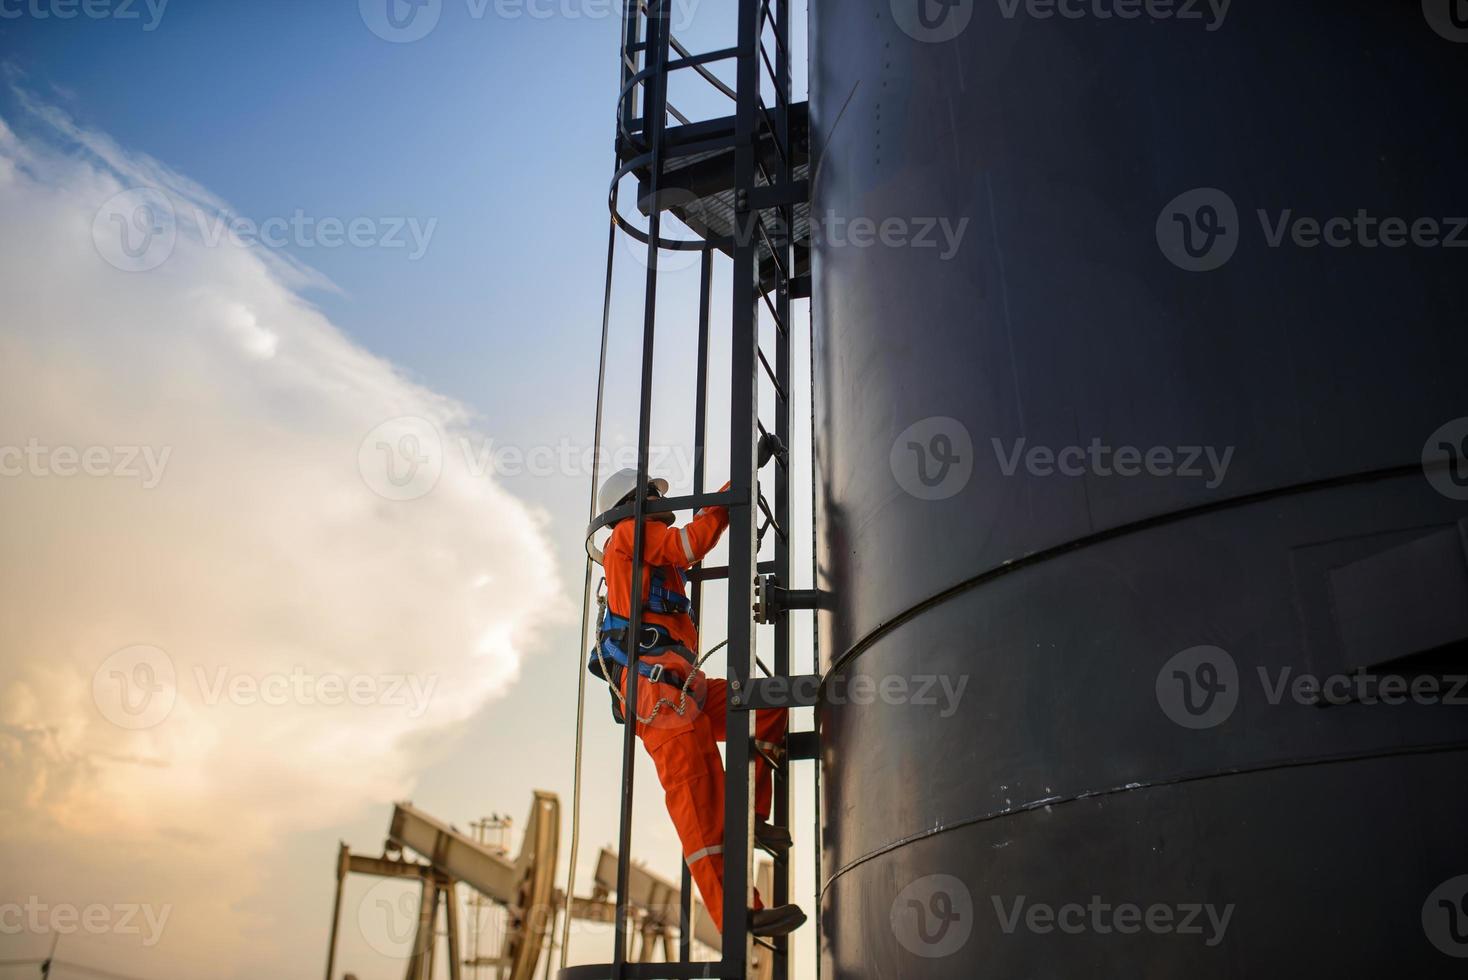 Mens werken in olie tuigage of olie veld- plaats, beklimmen olie tank voor werken in avond tijd met verrassing of zonsondergang. foto